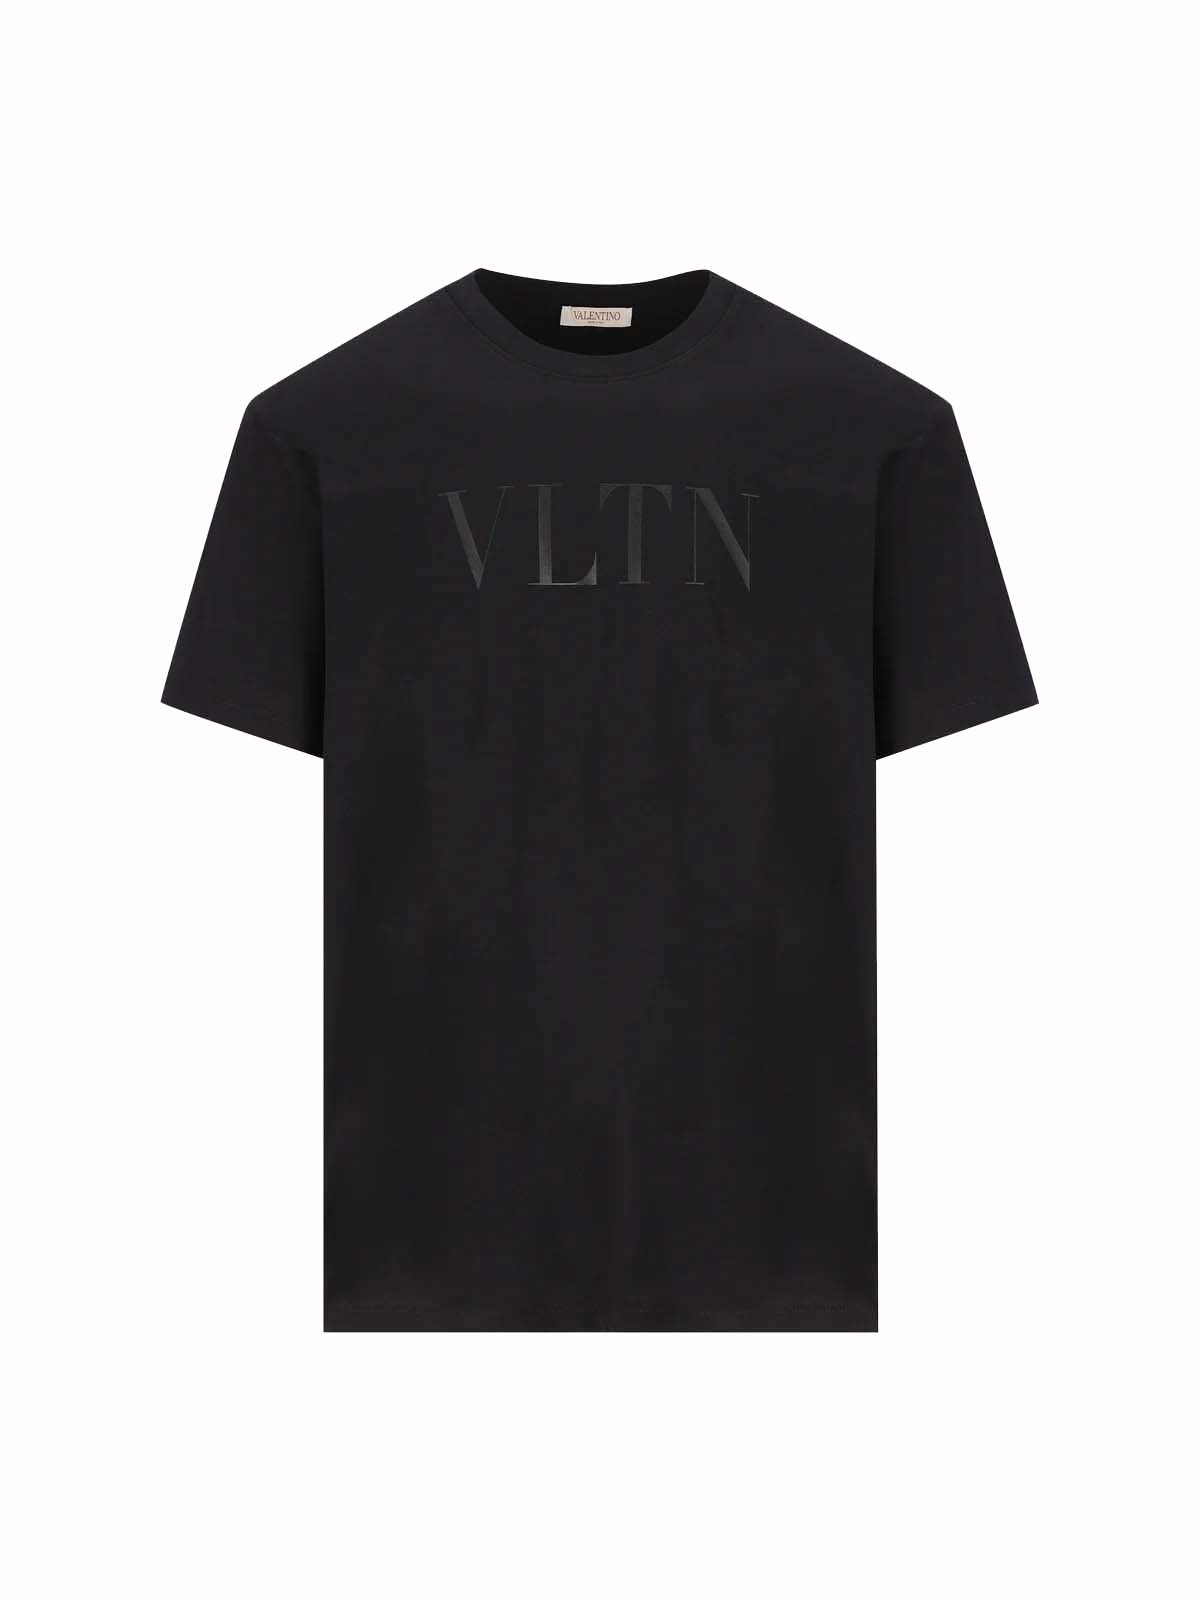 Valentino VLTN Logo T-Shirt Black